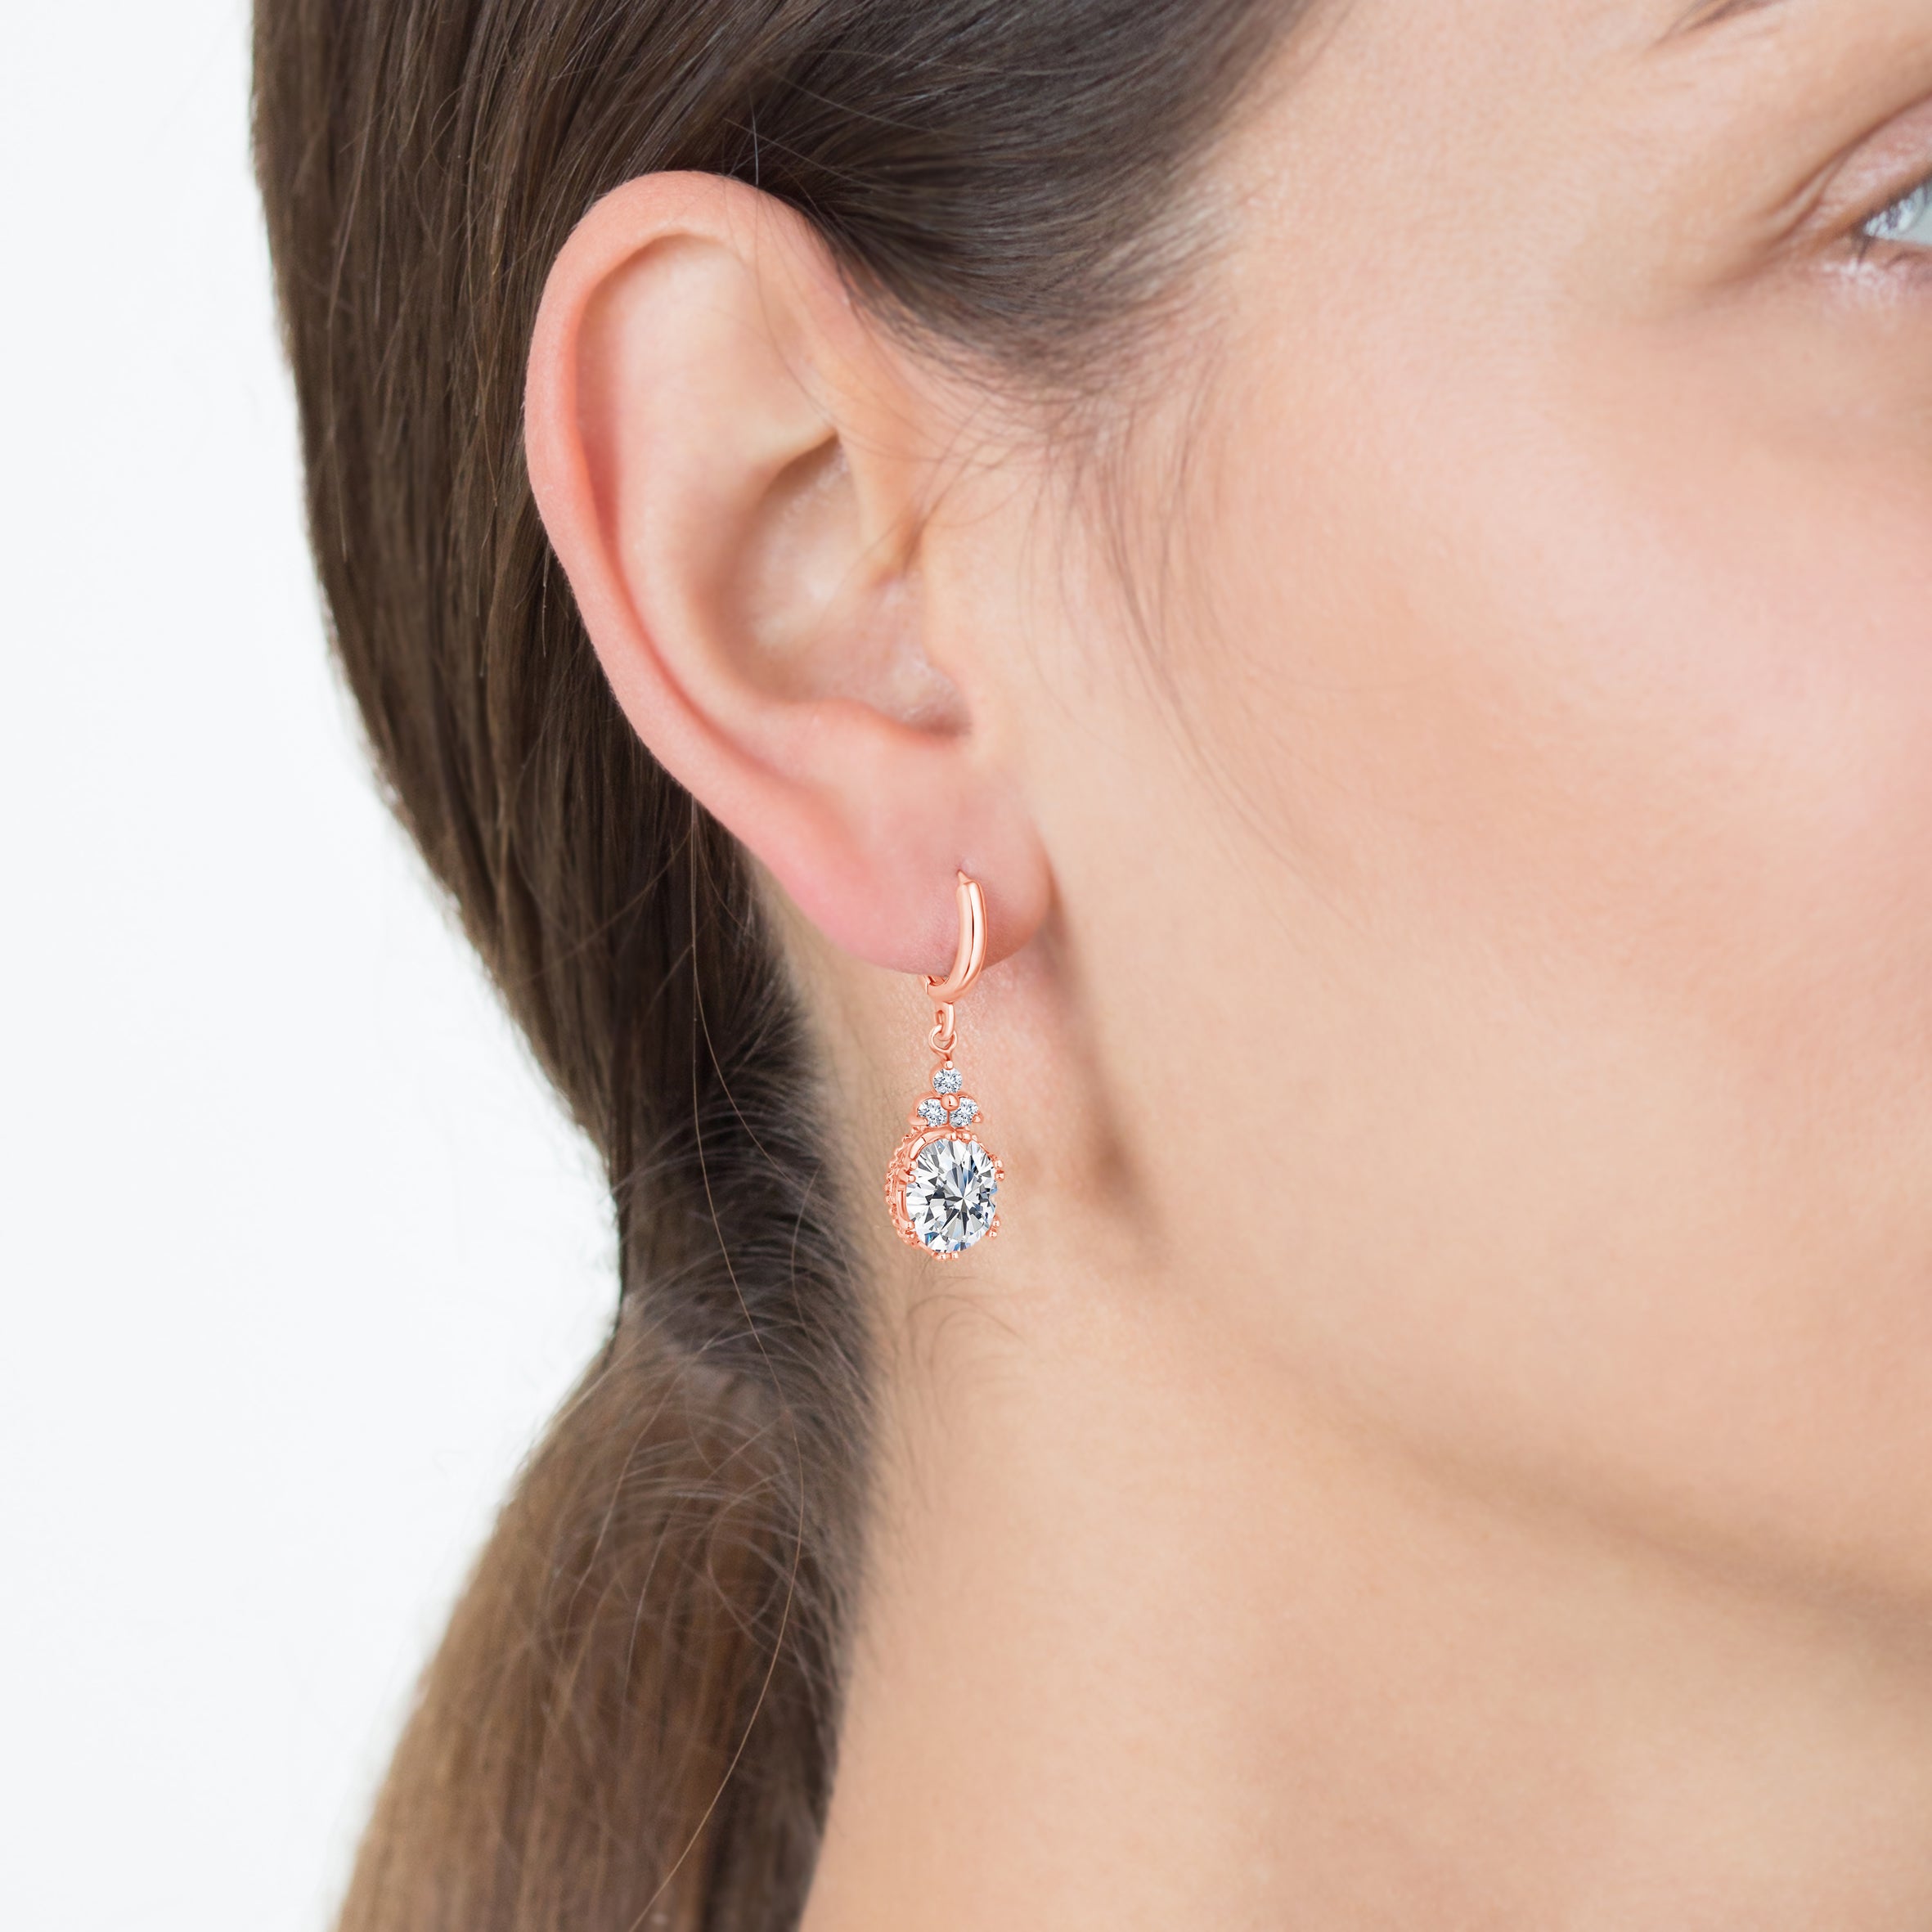 Elliptical Earrings in Rose Gold Plating